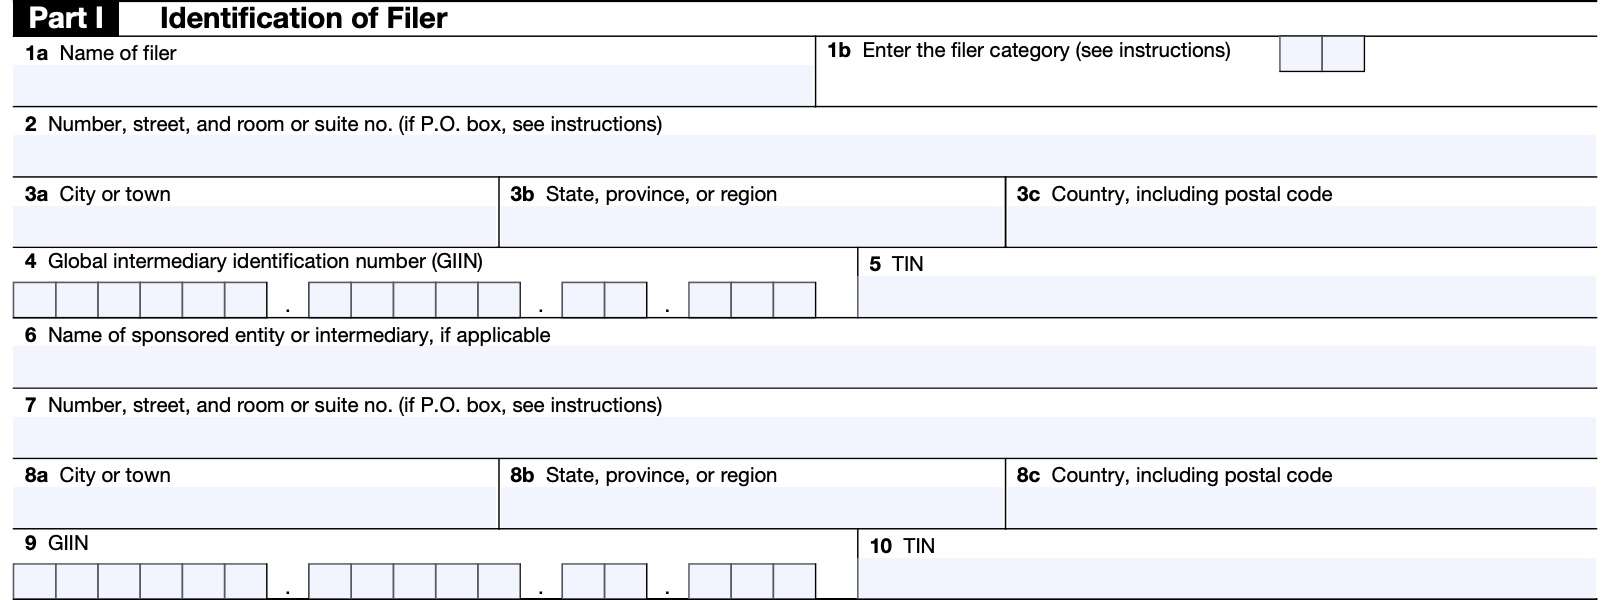 irs form 8966, part i: identification of filer